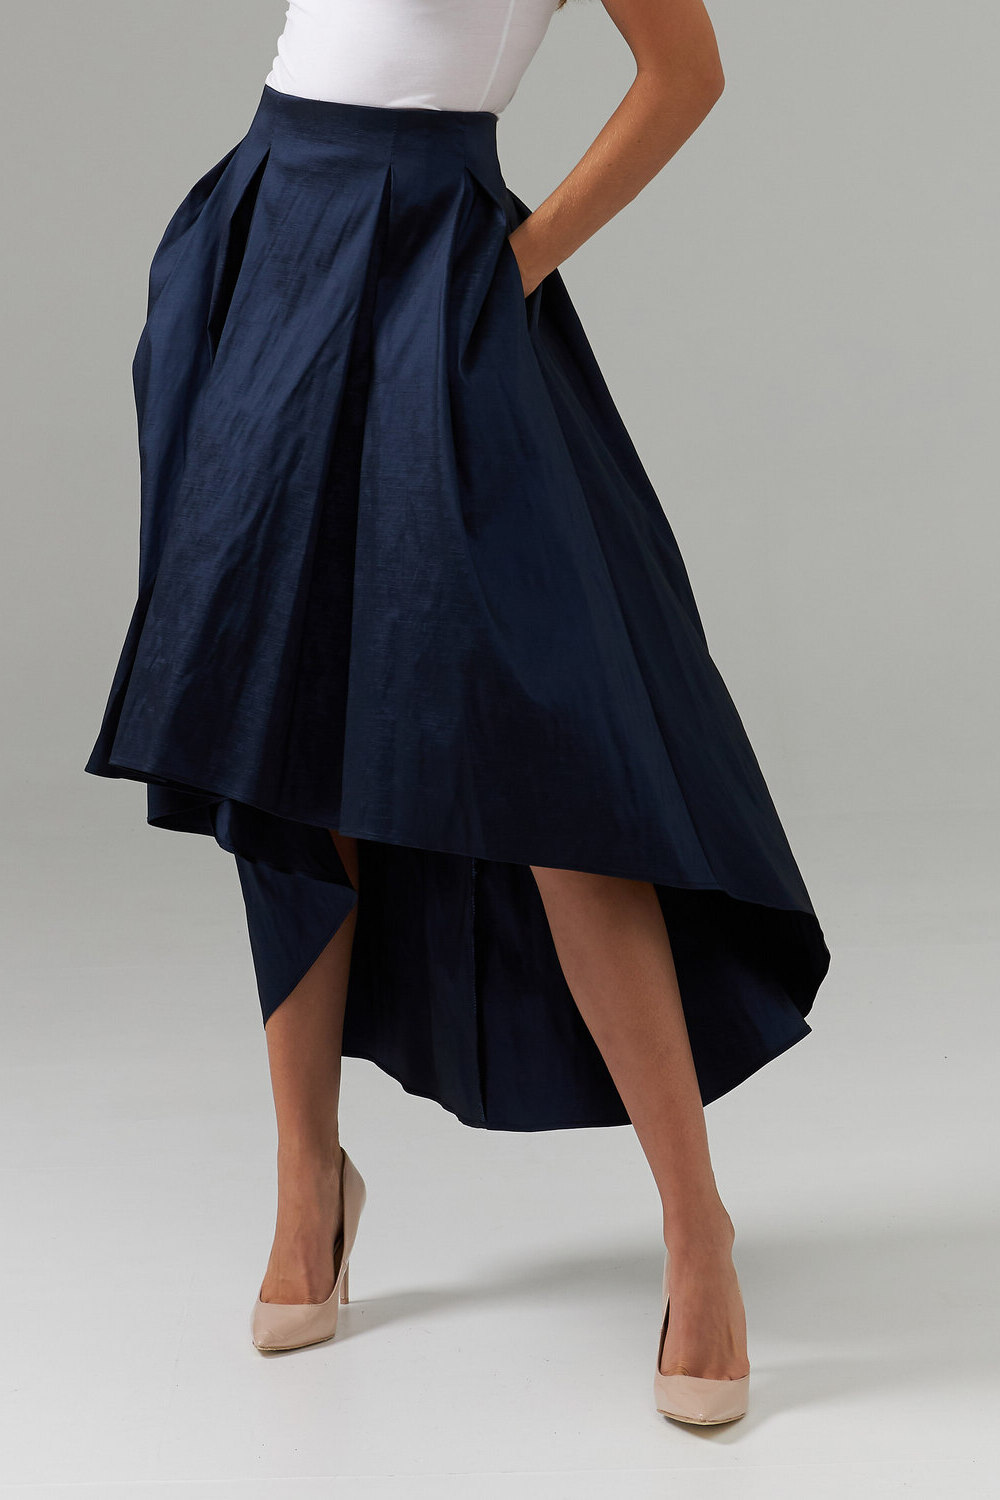 Joseph Ribkoff Skirt Style 203409. Navy Blue